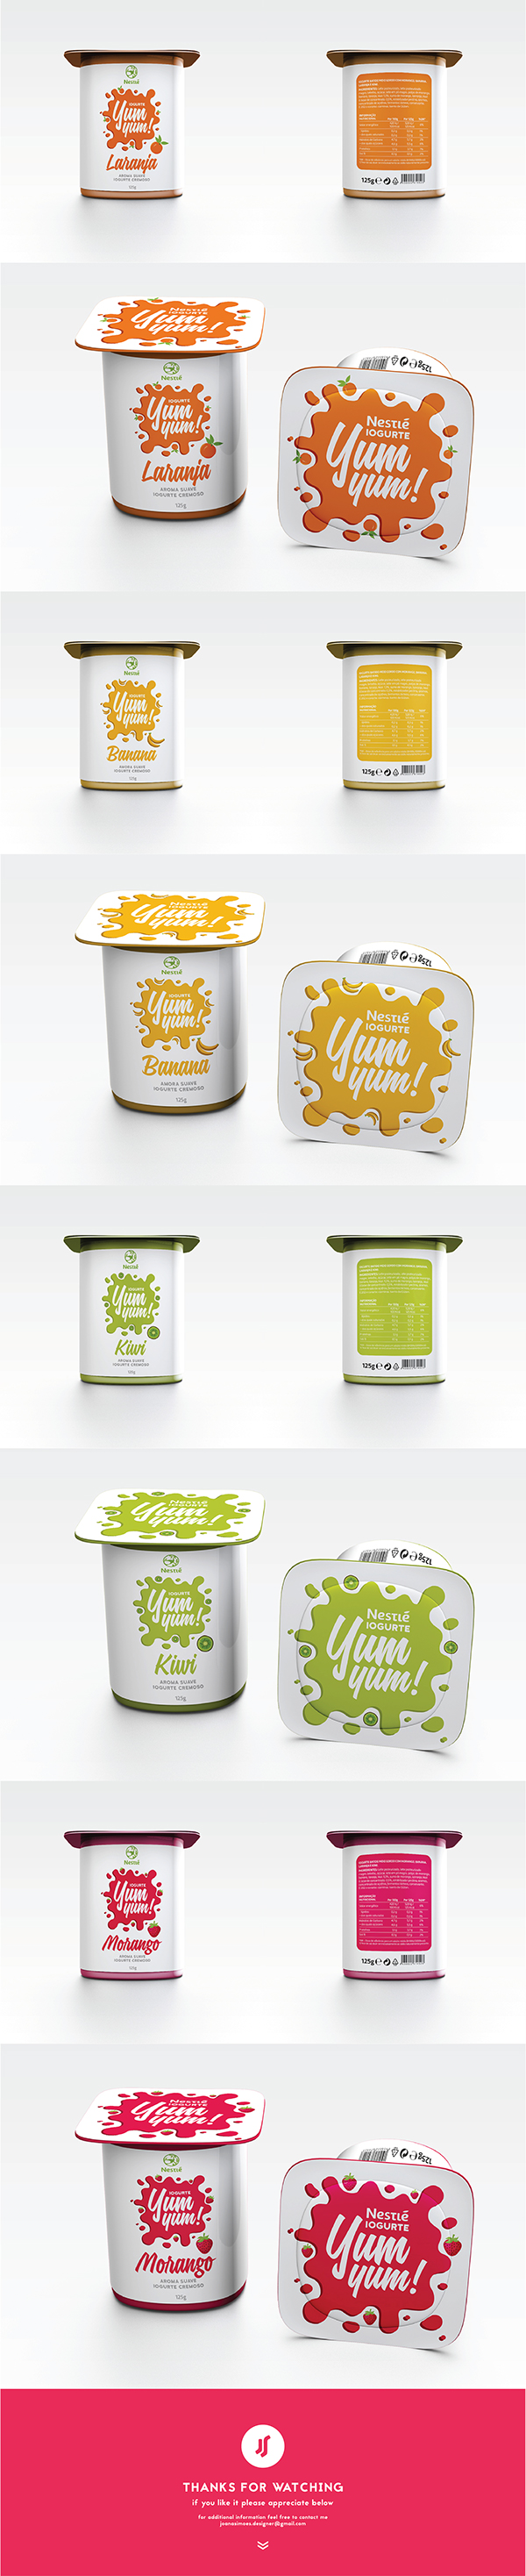 Yogurt Packaging / Nestlé